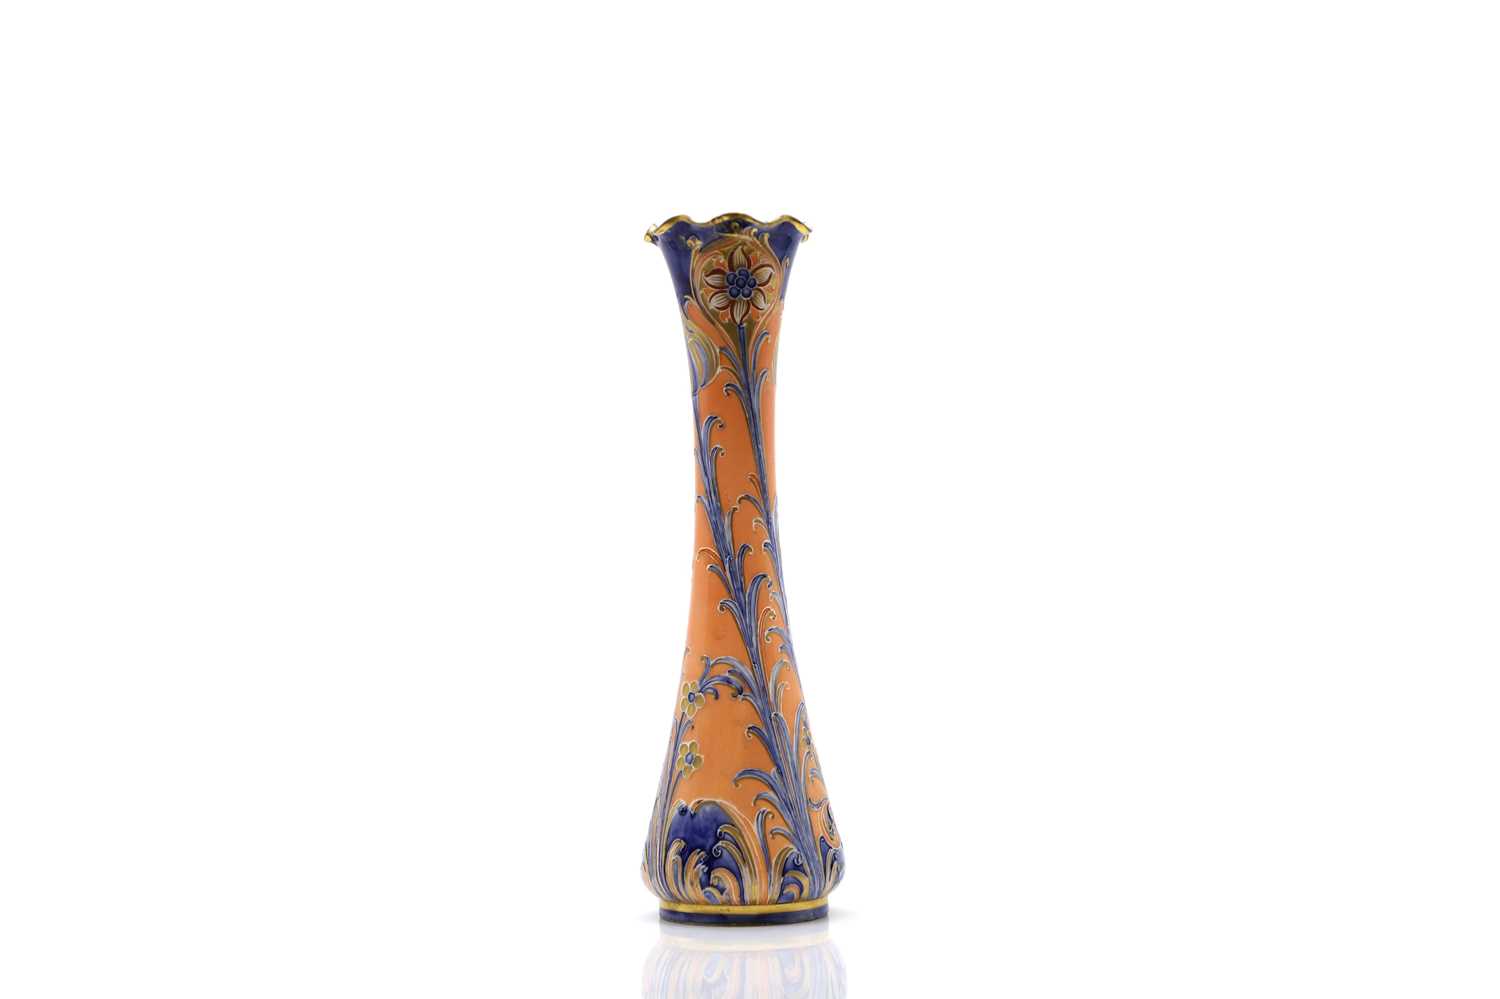 A James Macintyre & Co Florian ware 'Alhambra' vase - Image 2 of 3